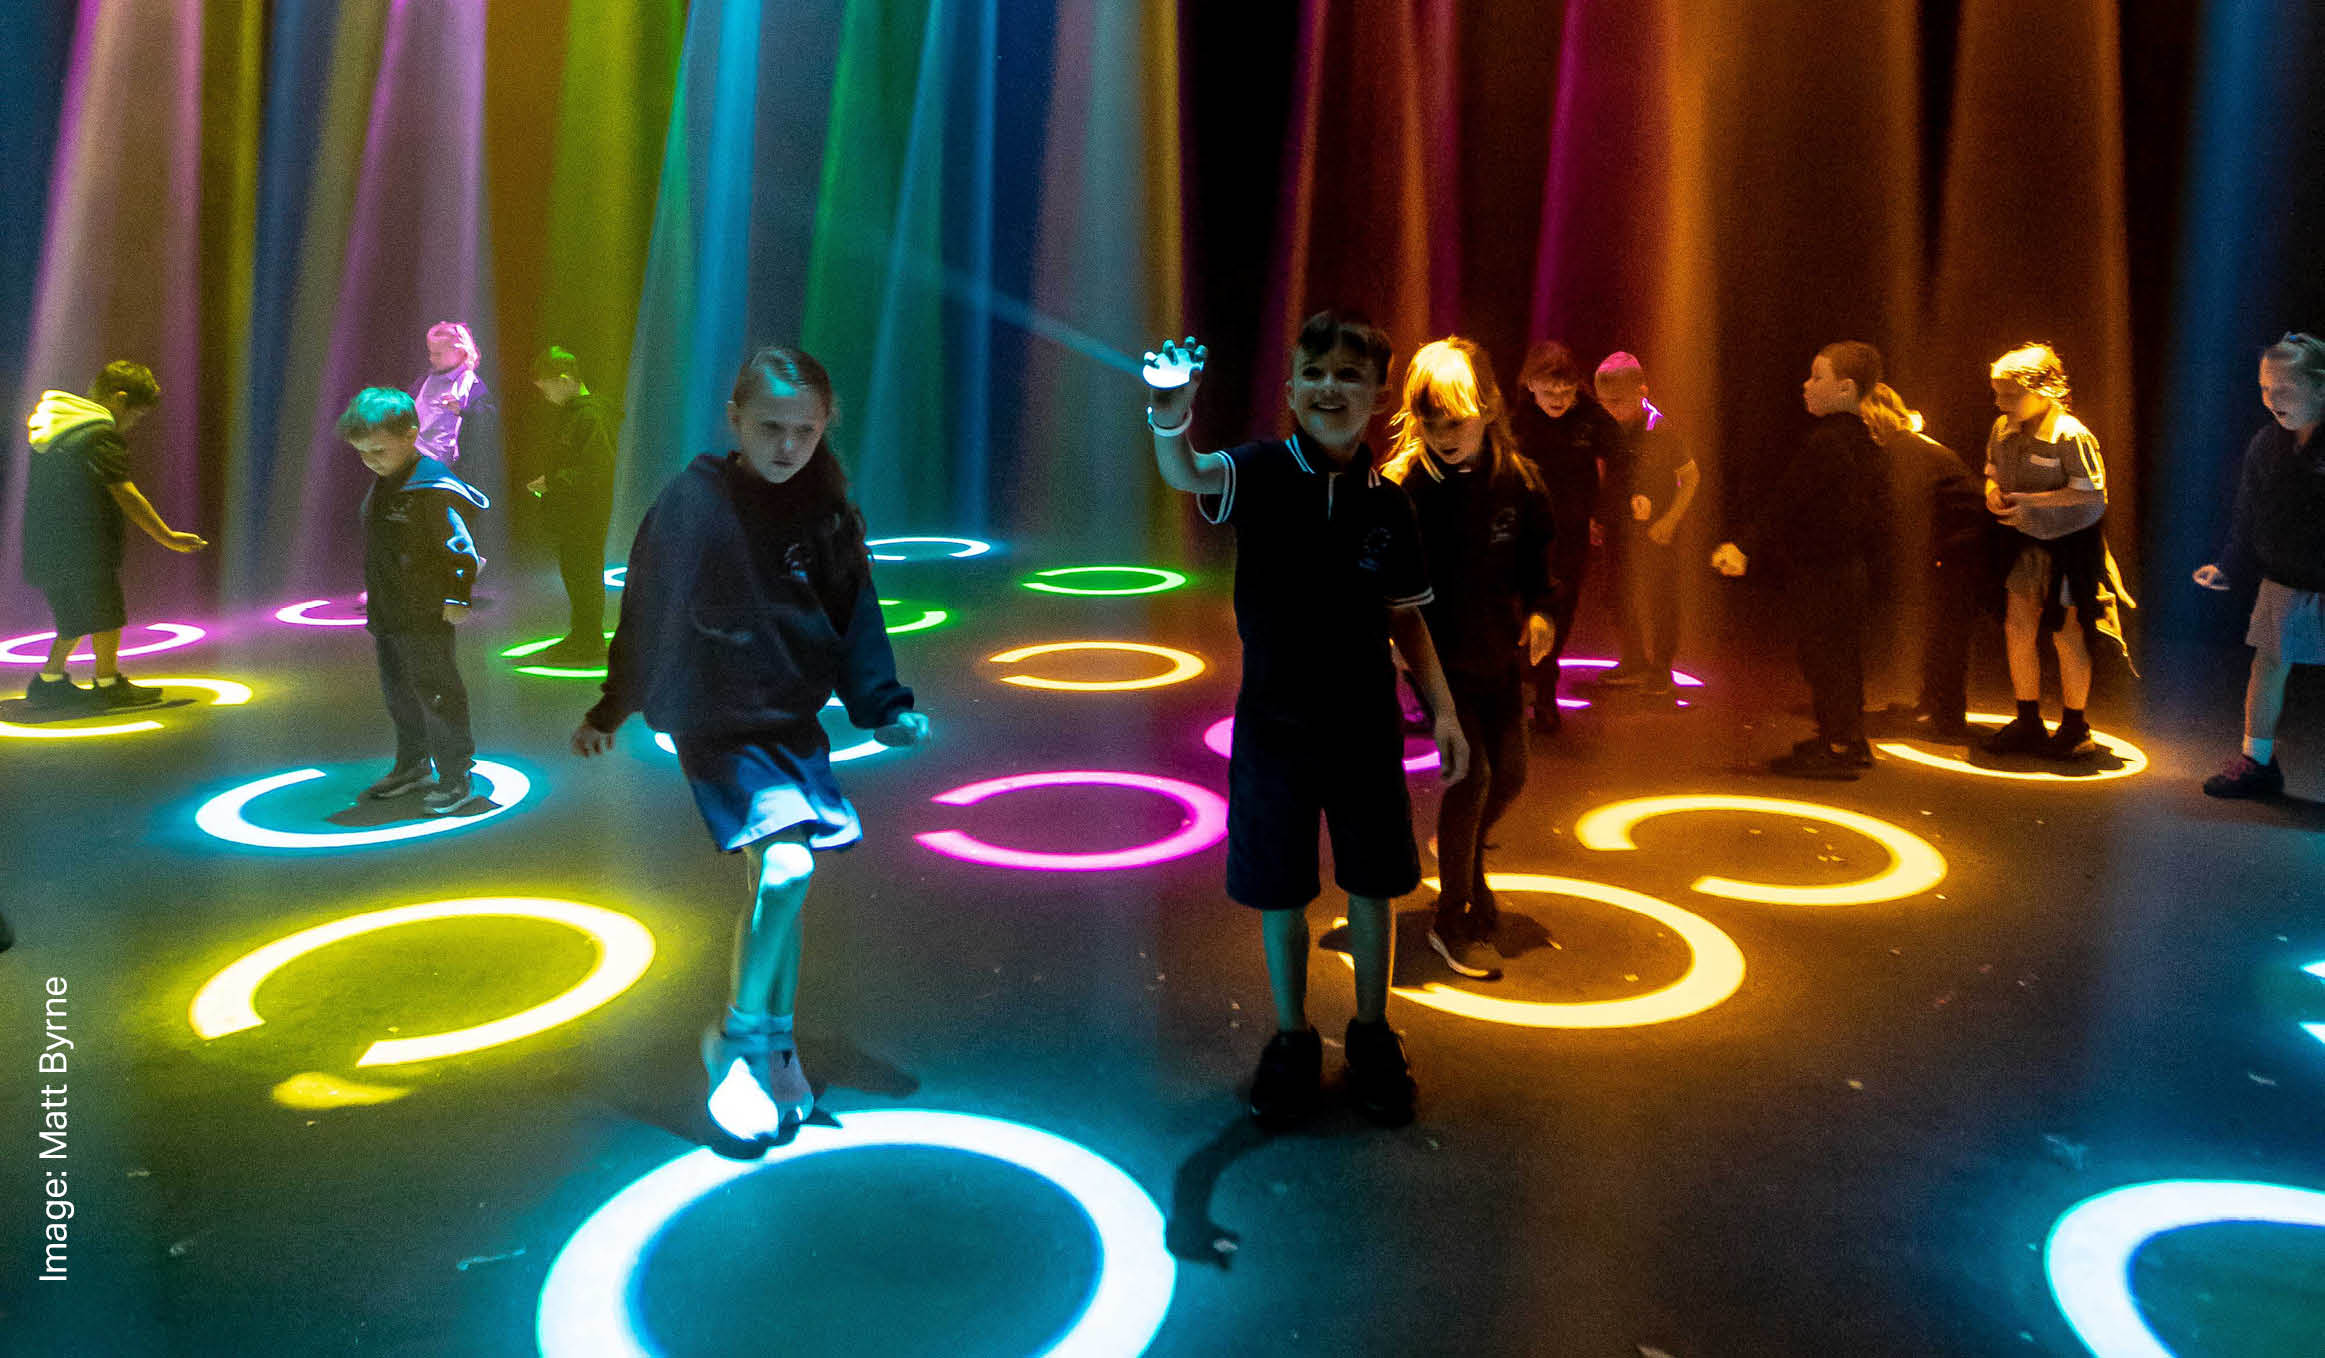 Children excited among laser lights